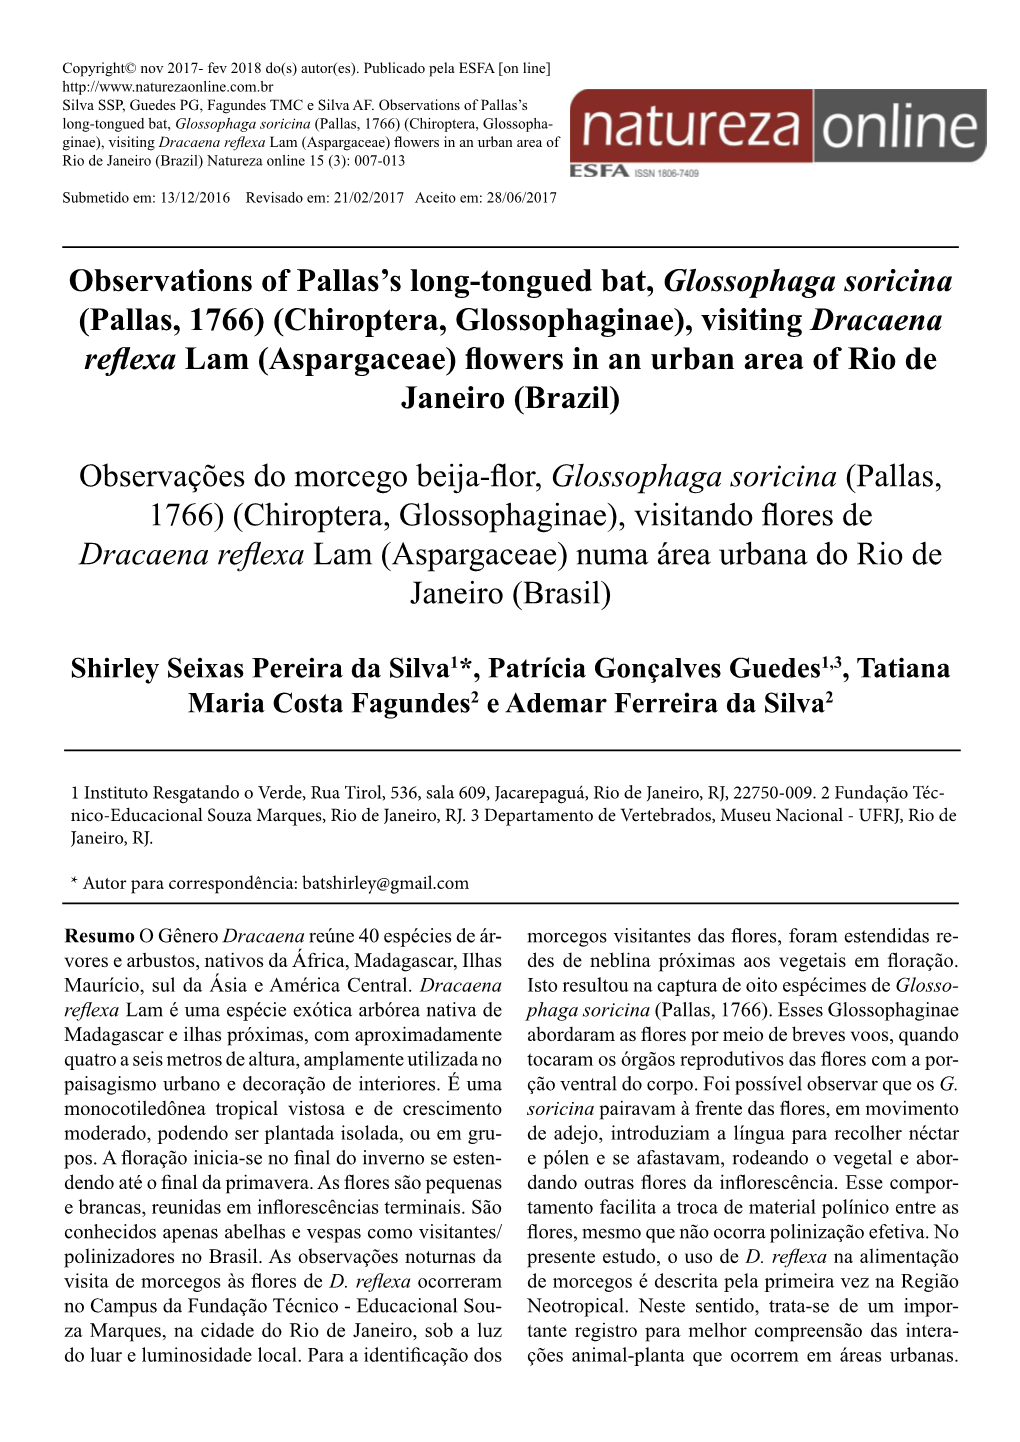 Observations of Pallas's Long-Tongued Bat, Glossophaga Soricina